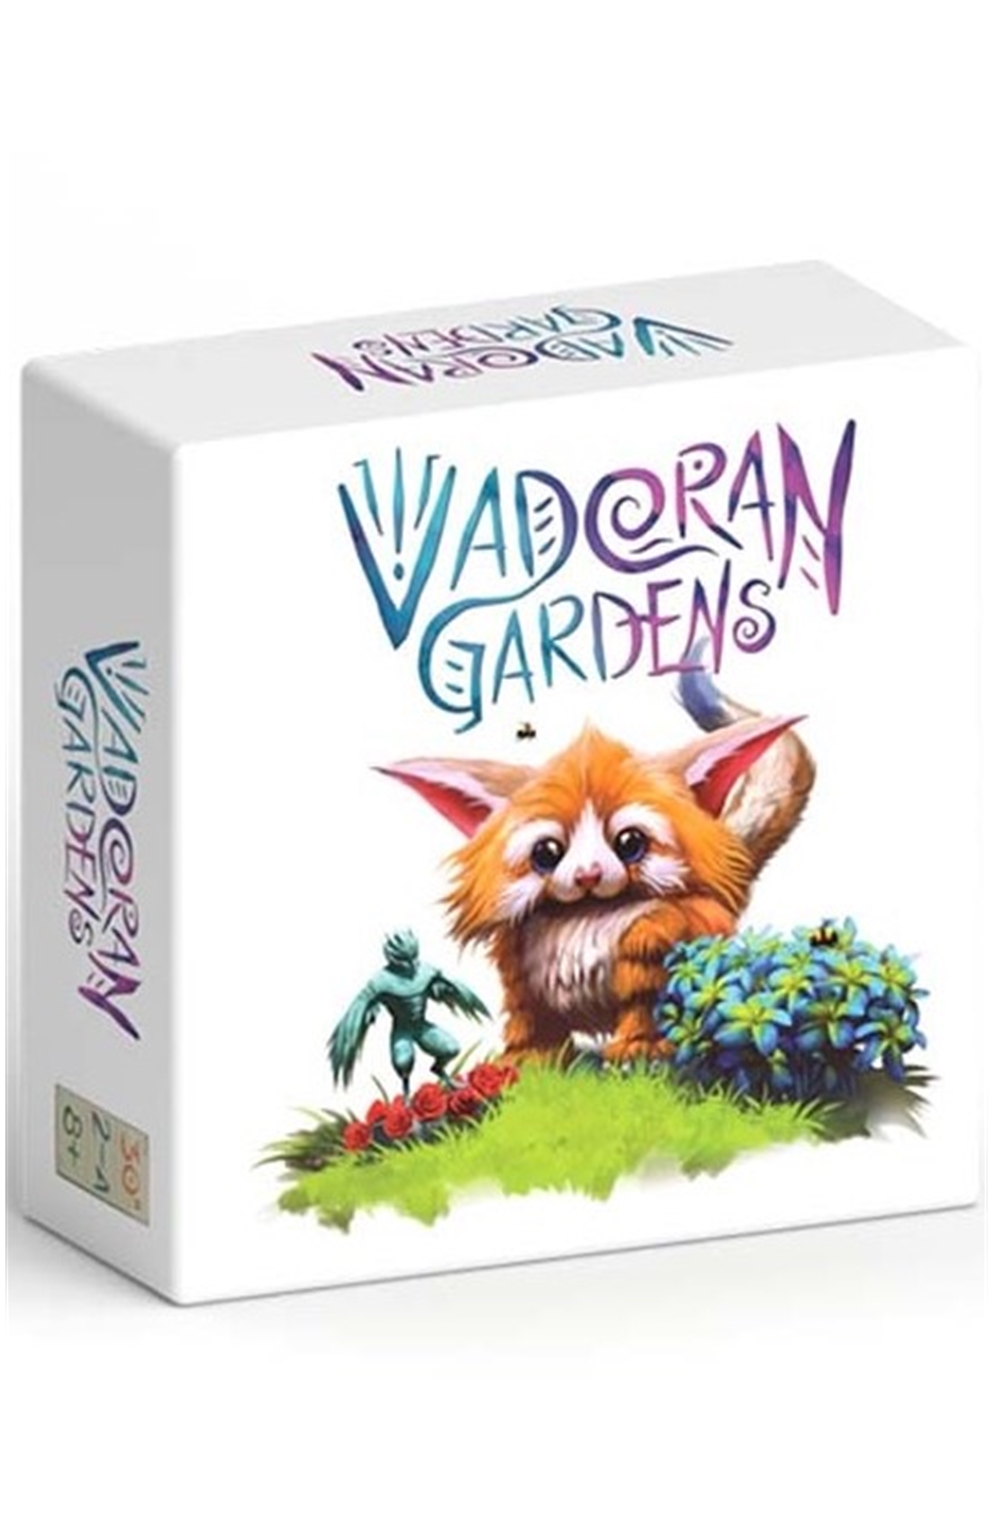 Vadoran Gardens Board Game Refreshed